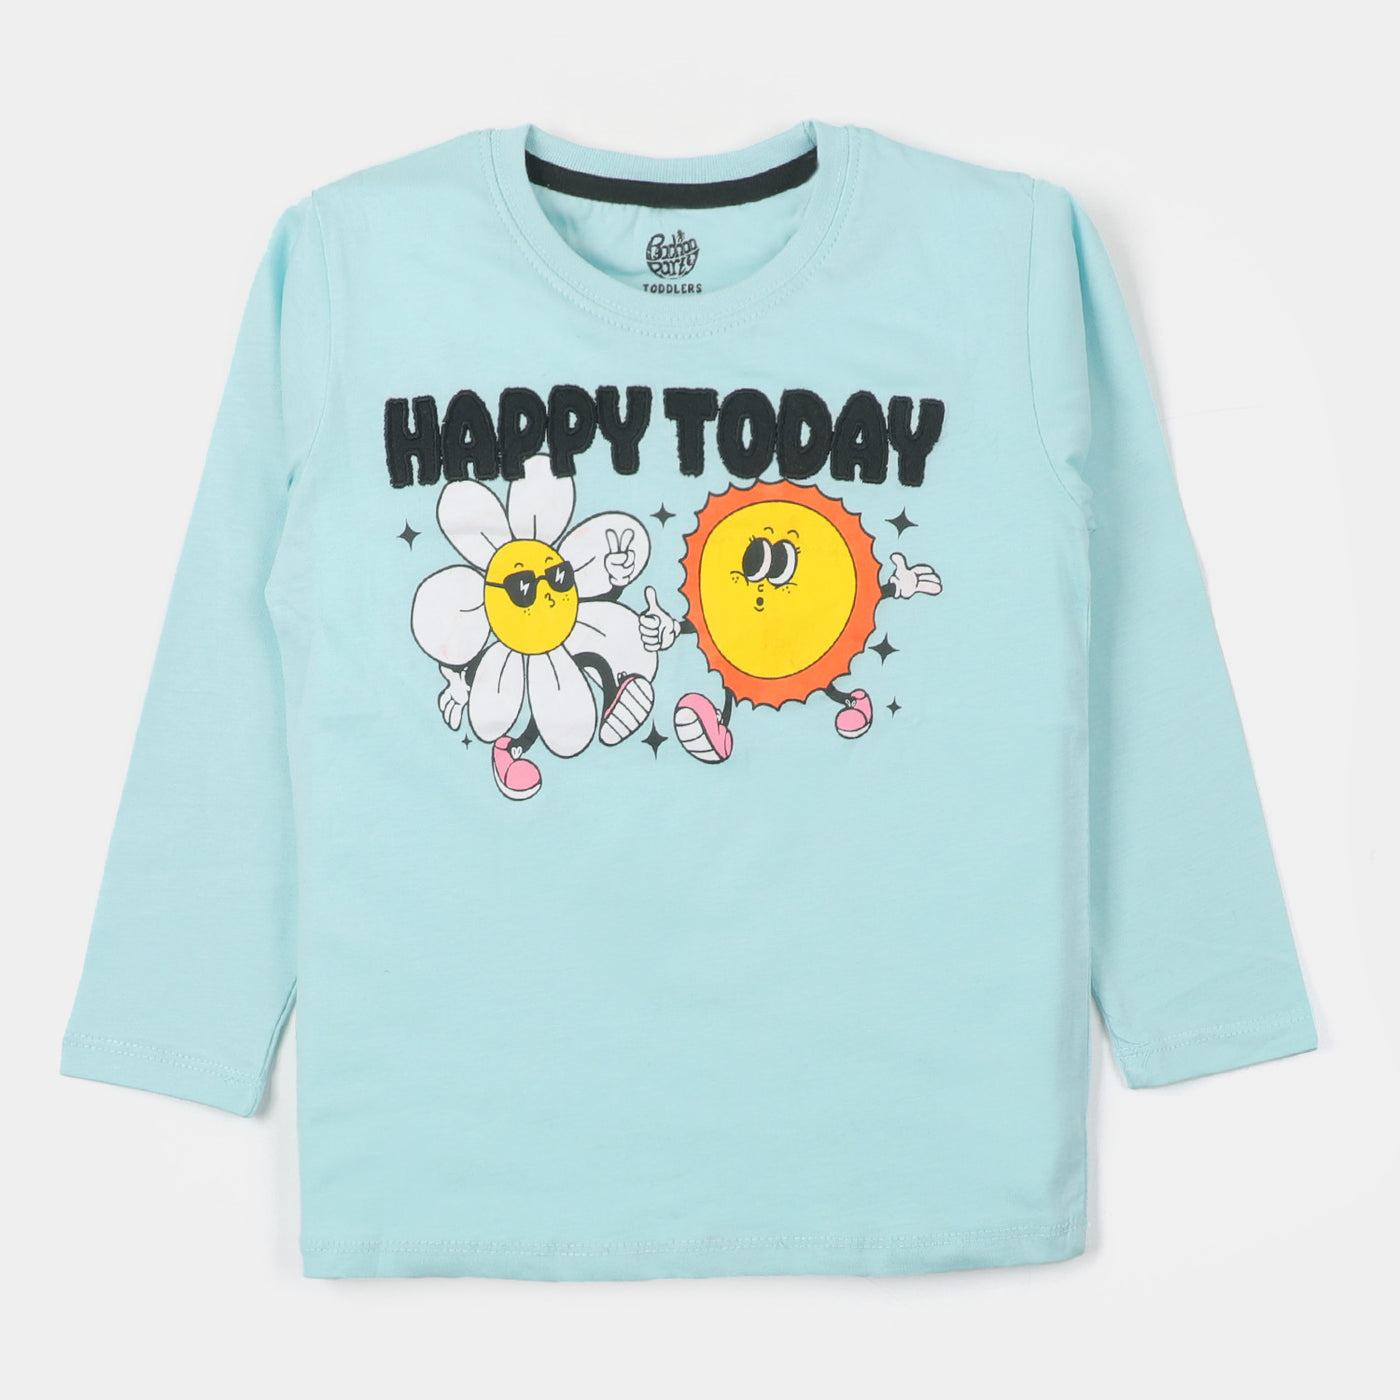 Girls T-Shirt Happy Today - Sky blue